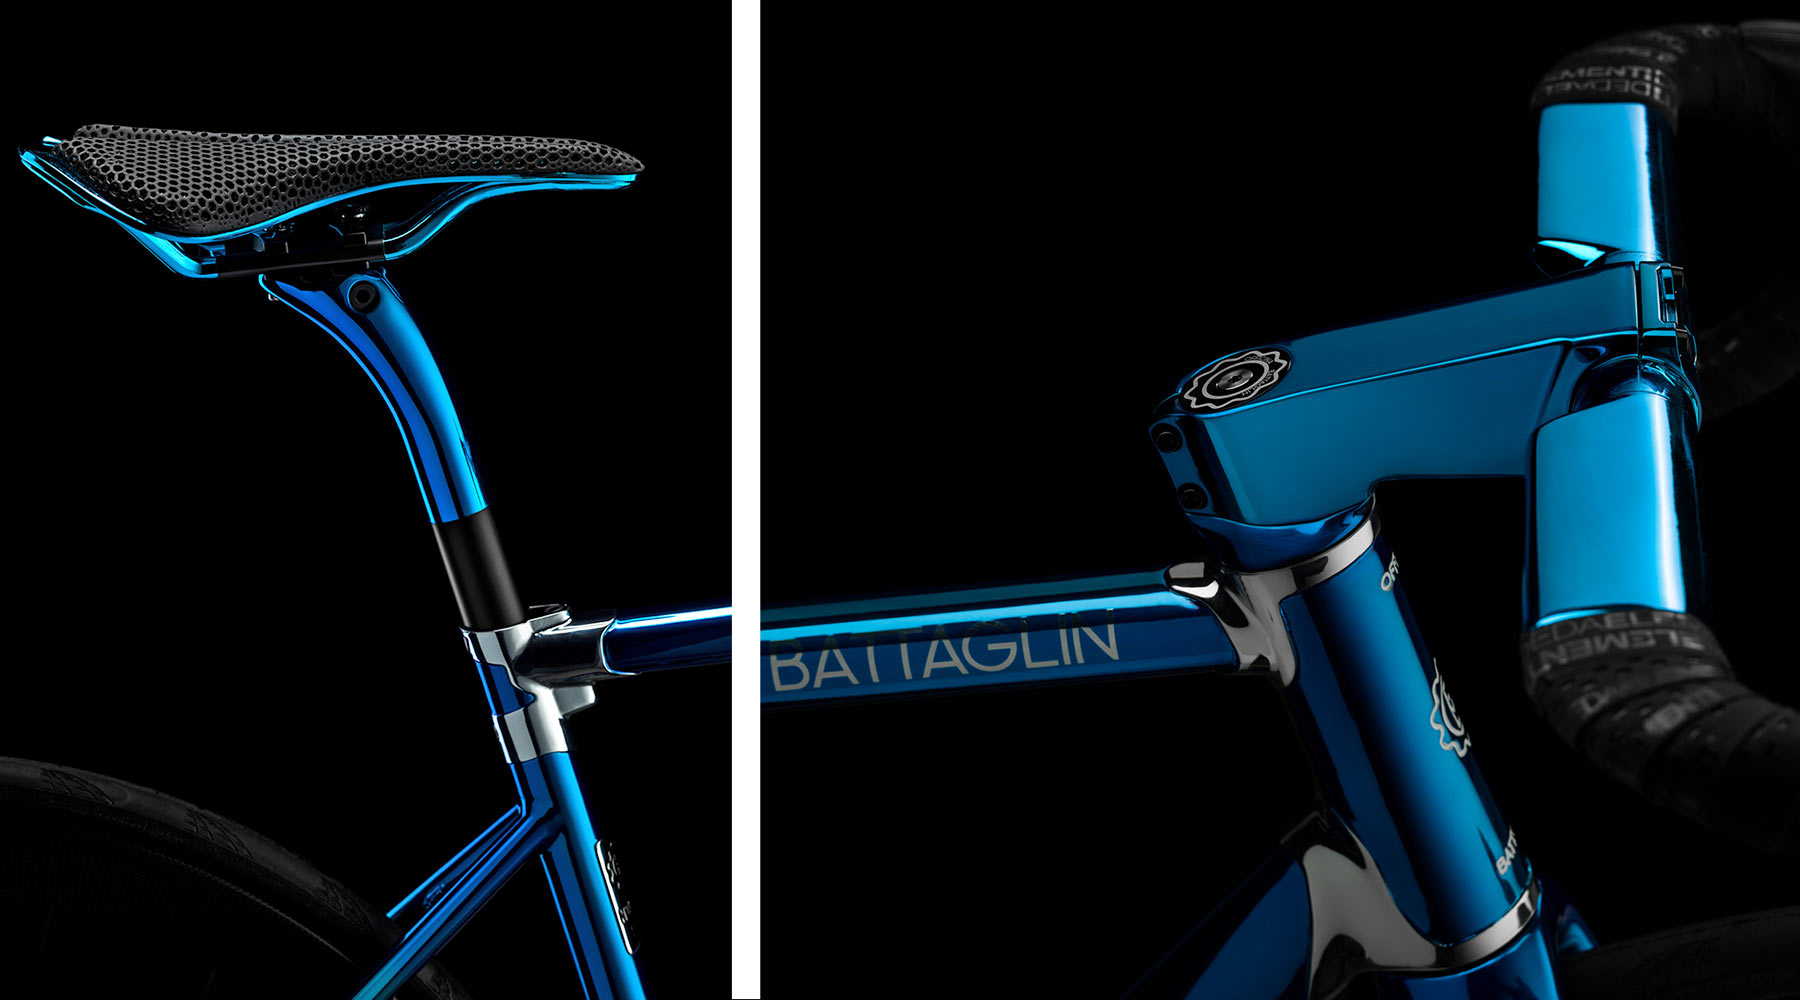 Battaglin Portofino R lugged steel road bike gets ultra-modern 